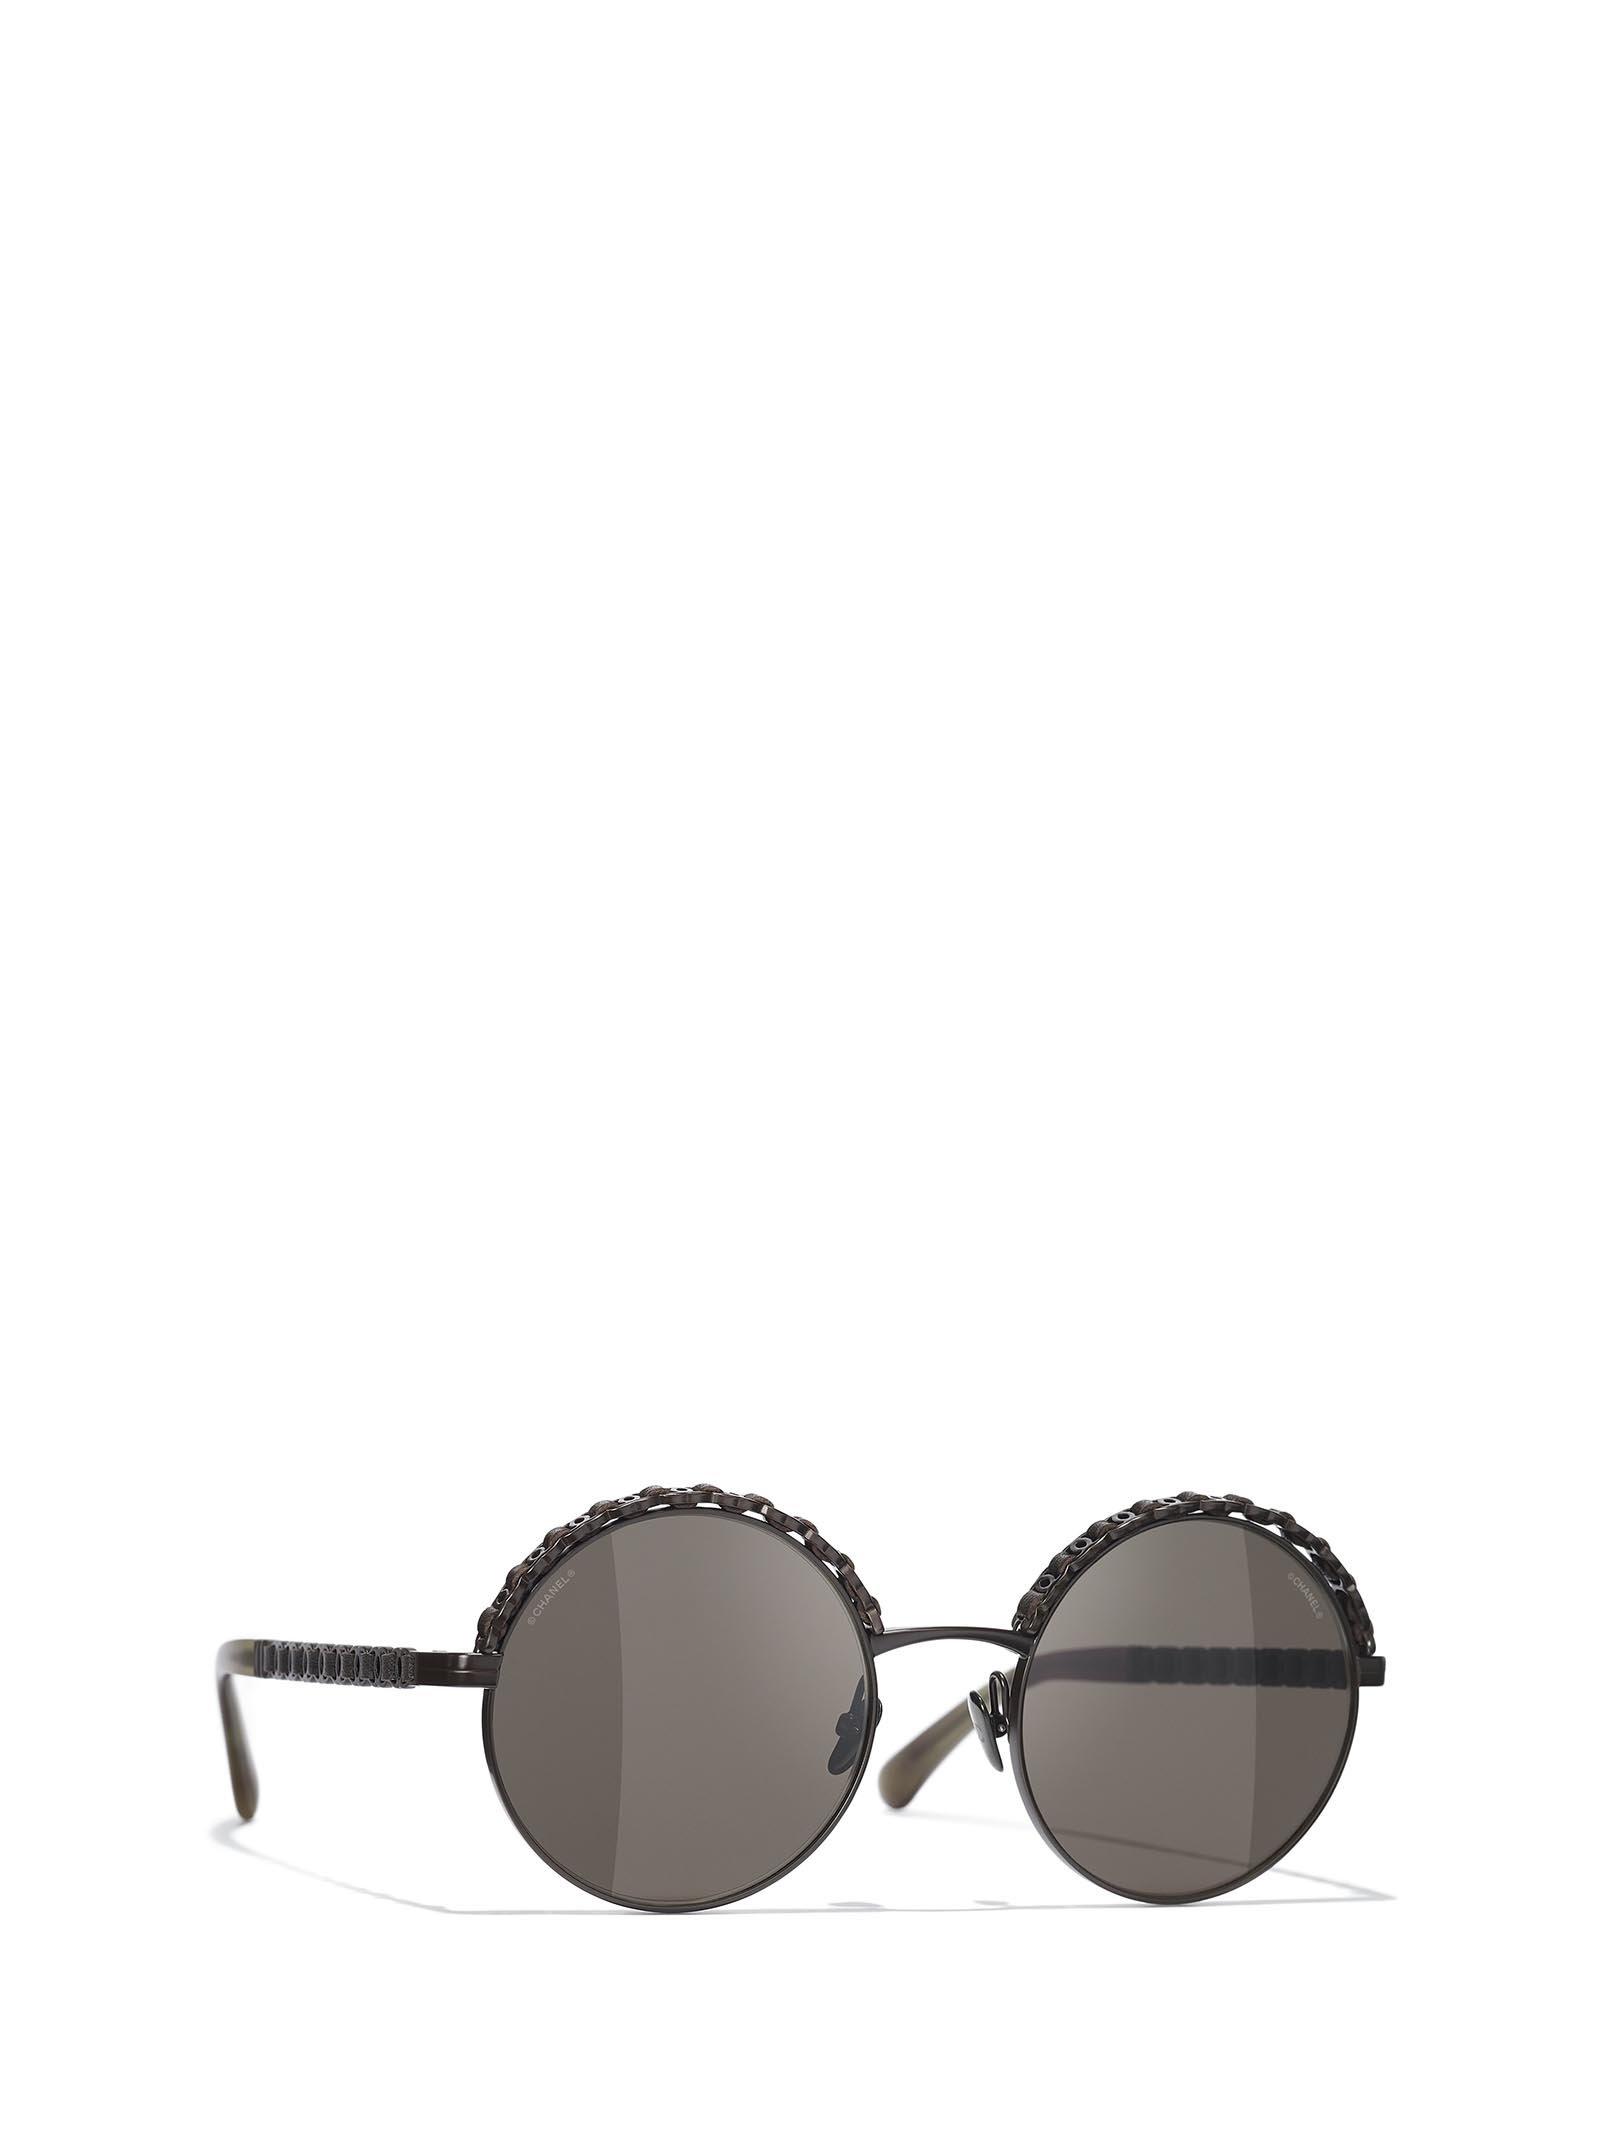 Chanel, Vintage round sunglasses - Unique Designer Pieces